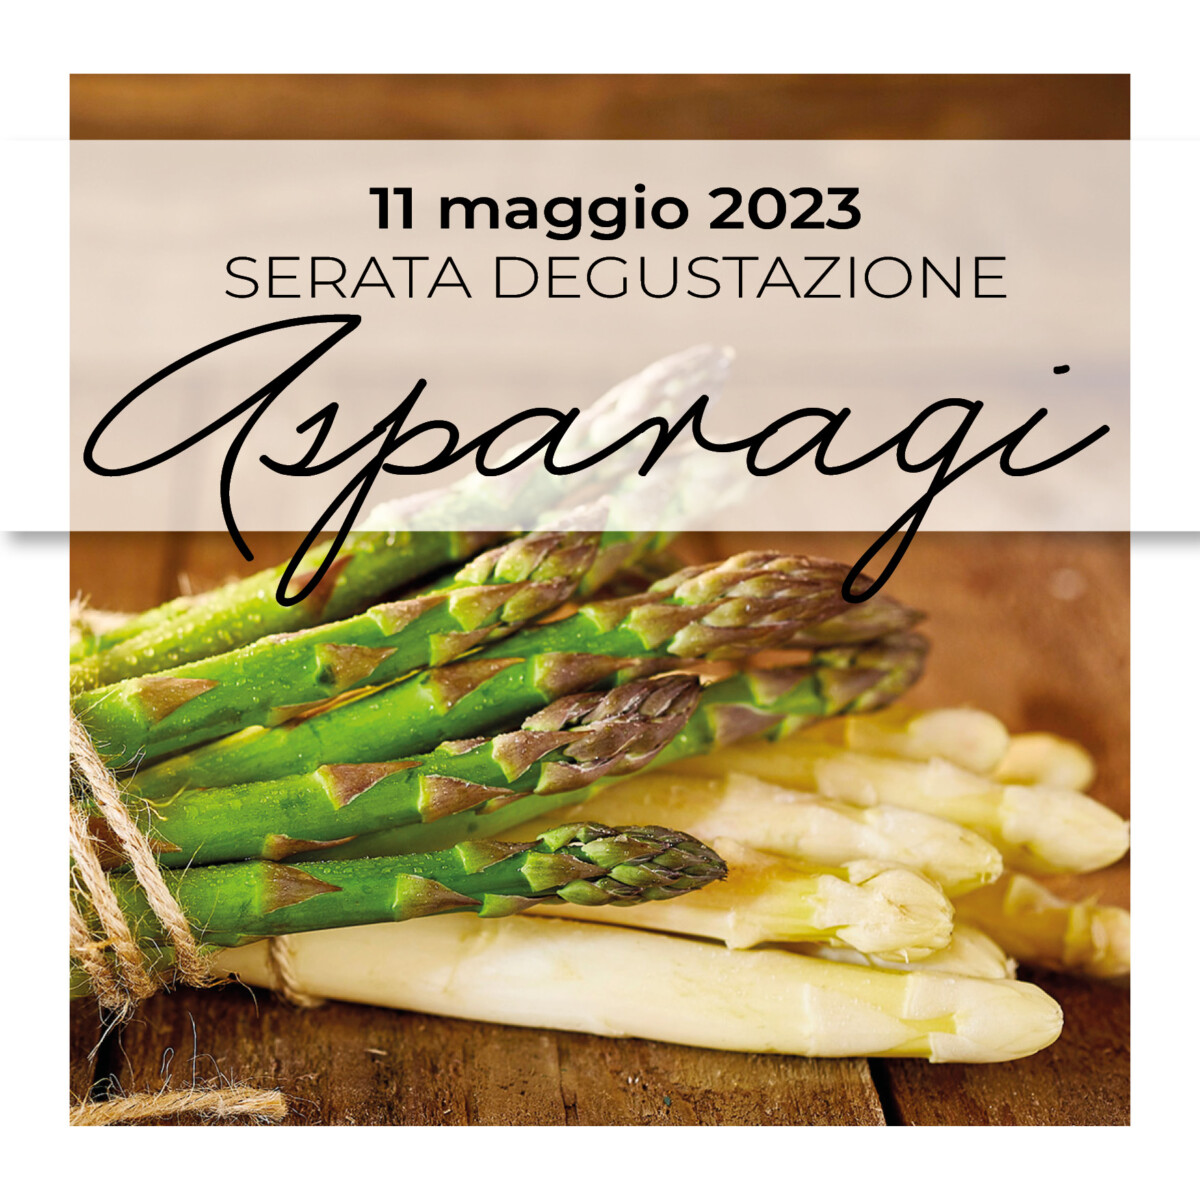 Serata asparagi 2023 – copertina